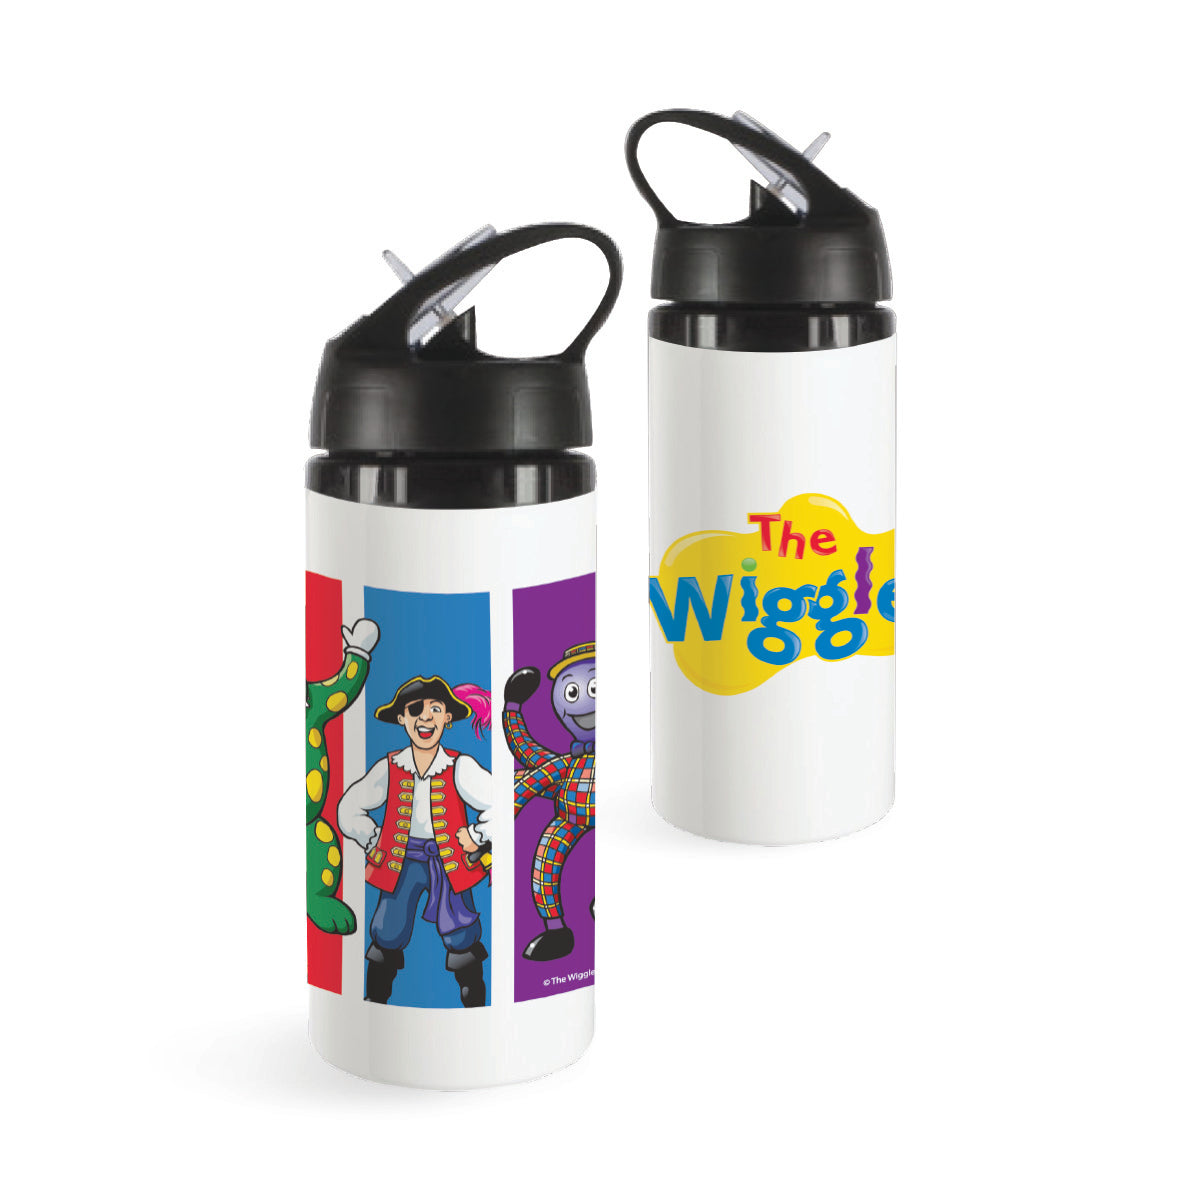 The Wiggles Original Friends Retro Drink Bottle